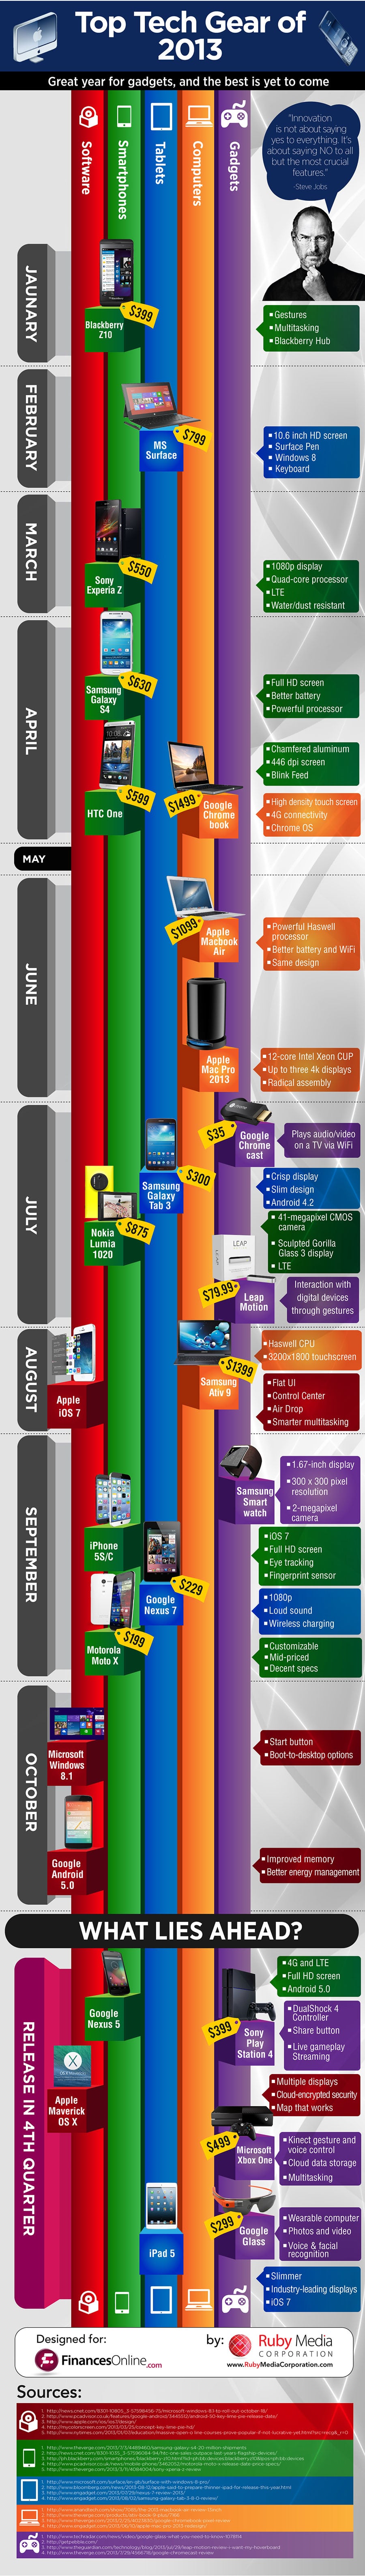 top-tech-geek-2013-infographic